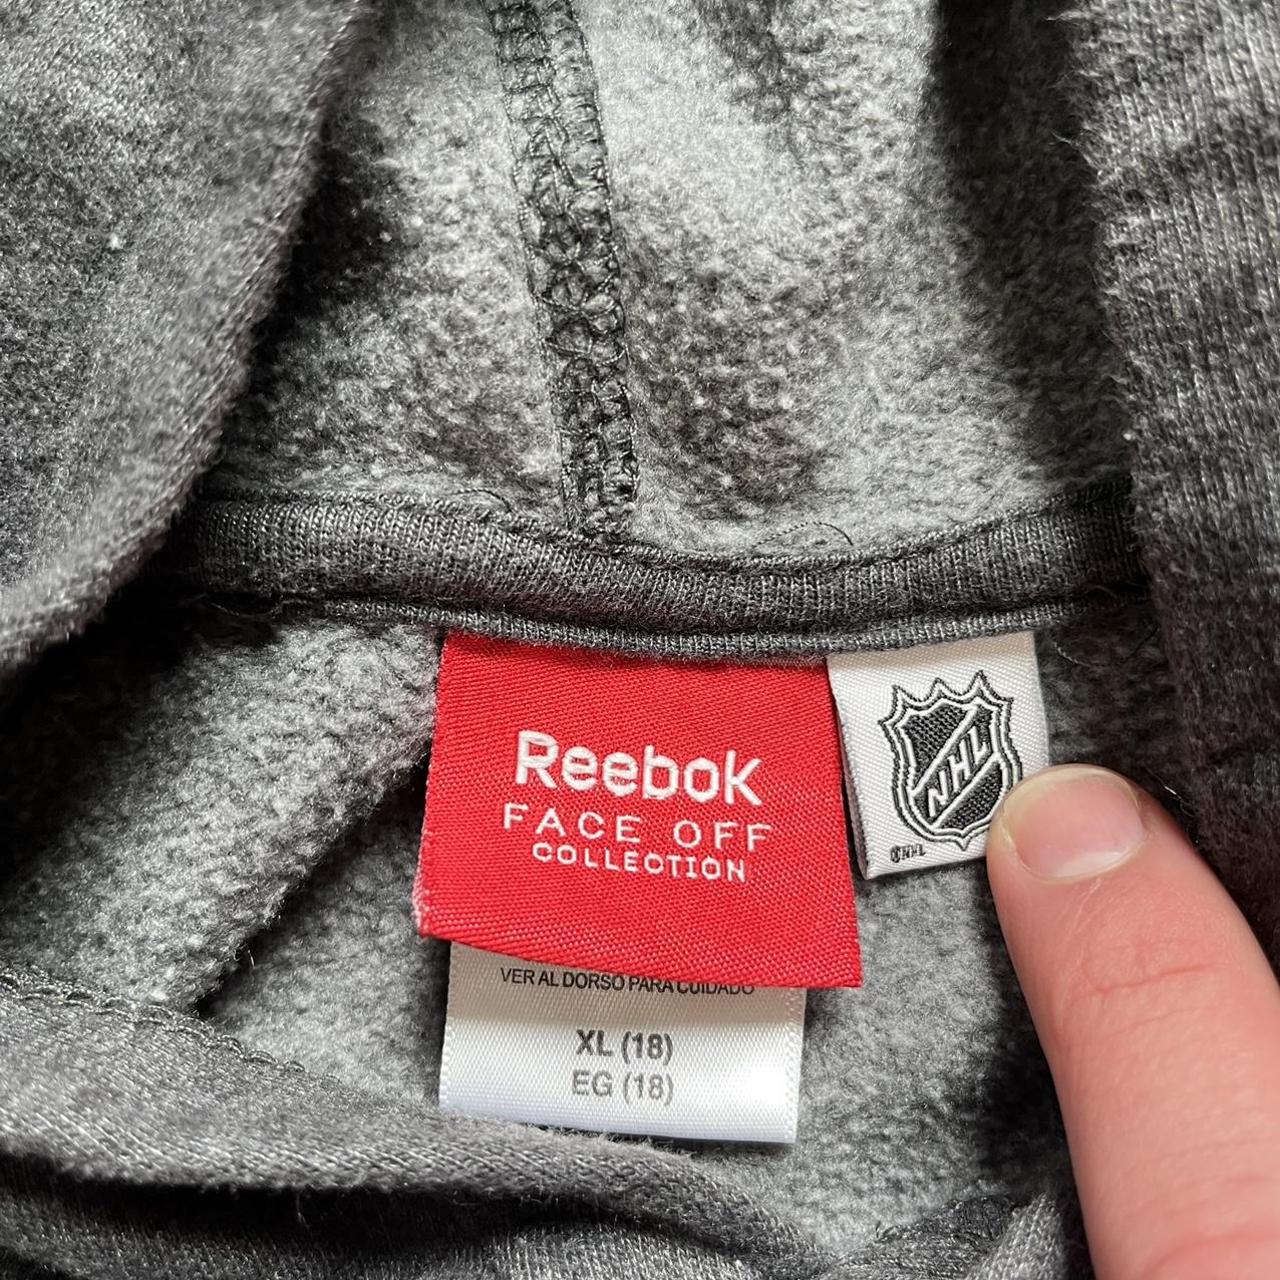 Boston bruins modern NHL hoodie XL Size- - Depop